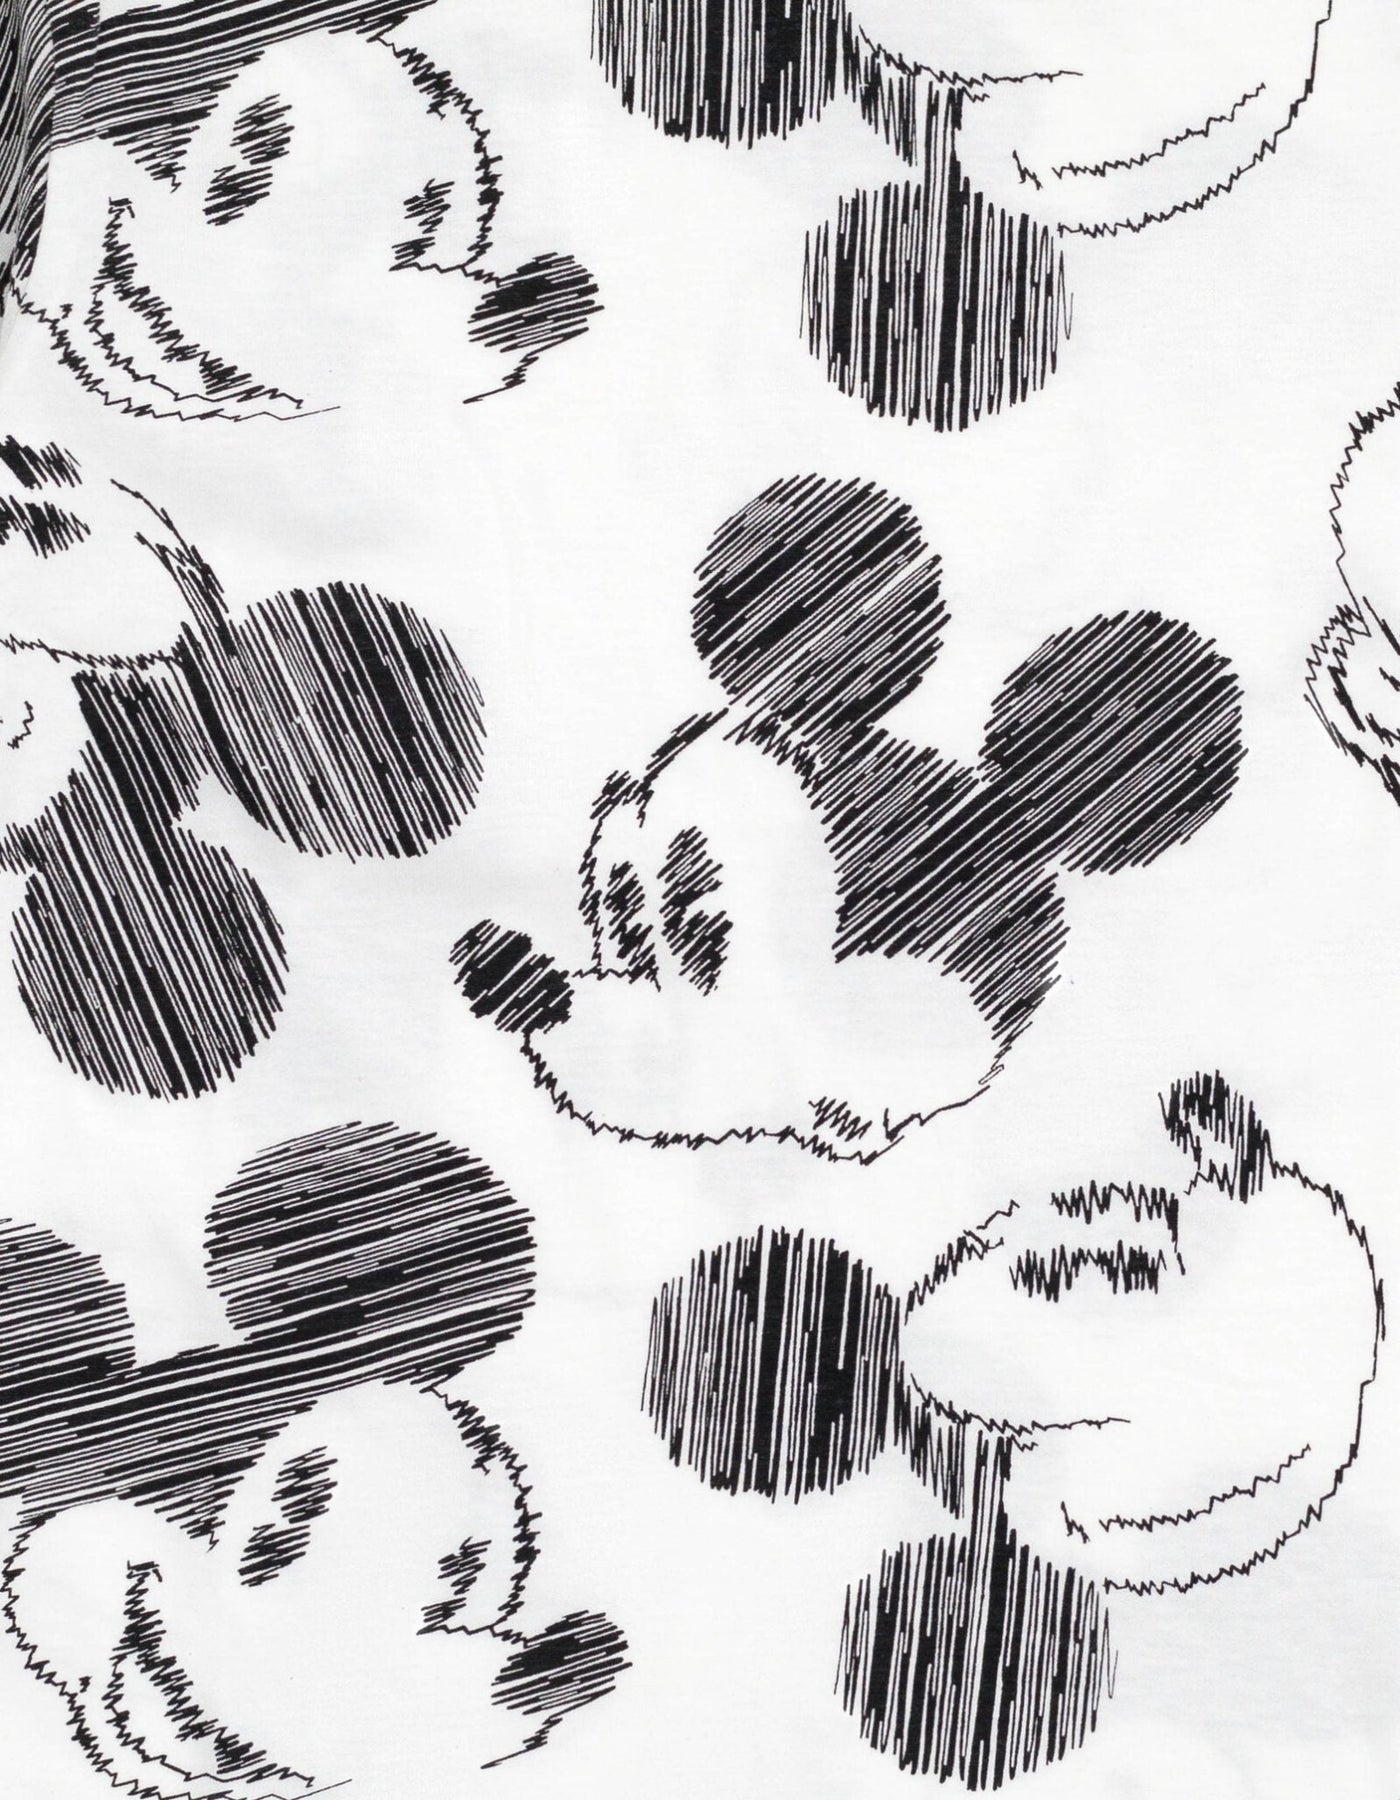 Disney Mickey Mouse 2 Pack T-Shirts - imagikids